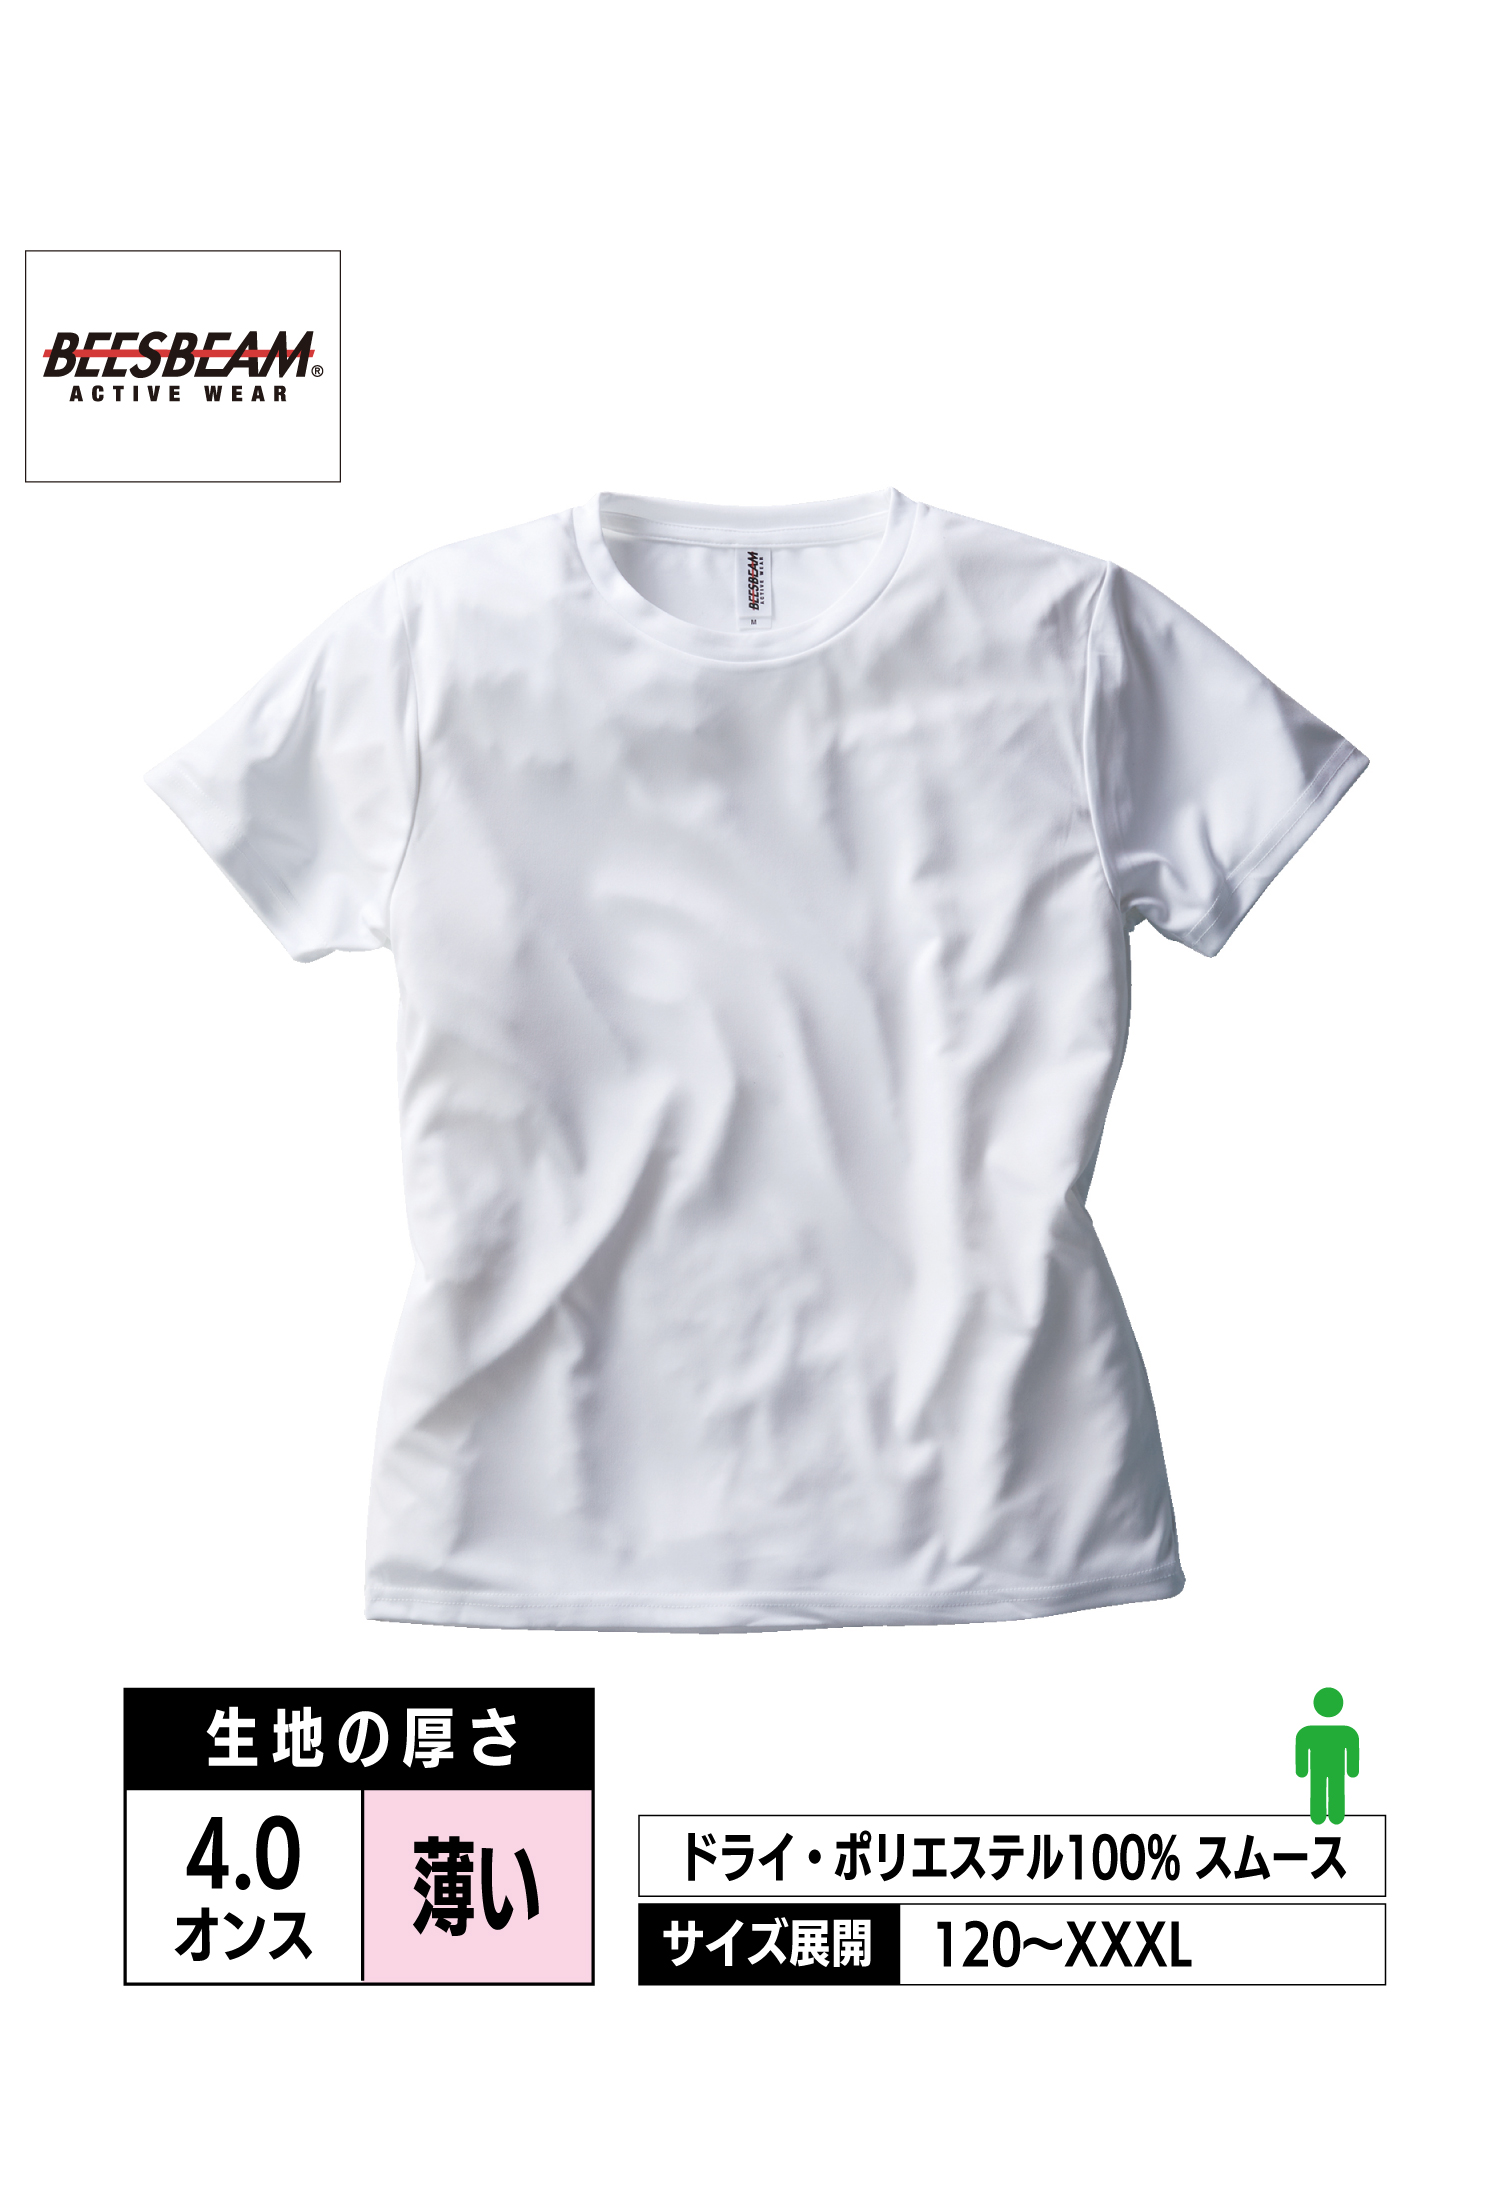 FDT-100｜ファンクショナル ドライTシャツ【全17色】BEESBEAM